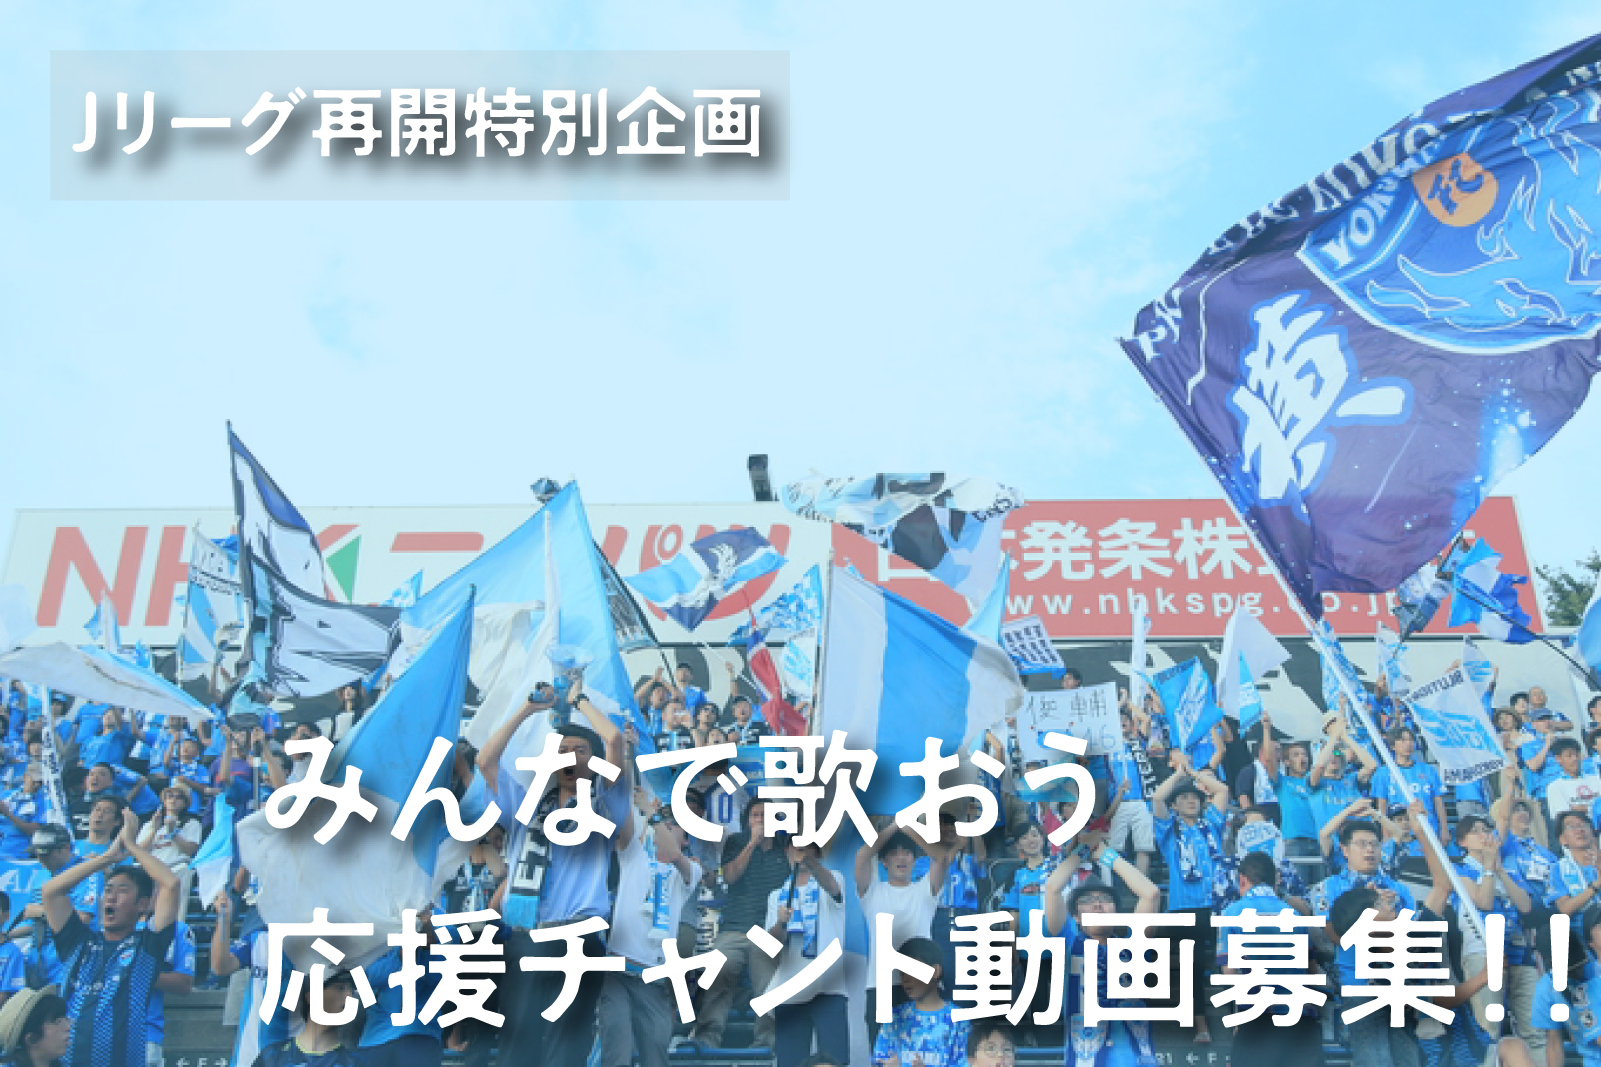 ｊリーグ再開特別企画 みんなで歌ってスタジアムに声援を届けよう 株式会社横浜フリエスポーツクラブのプレスリリース